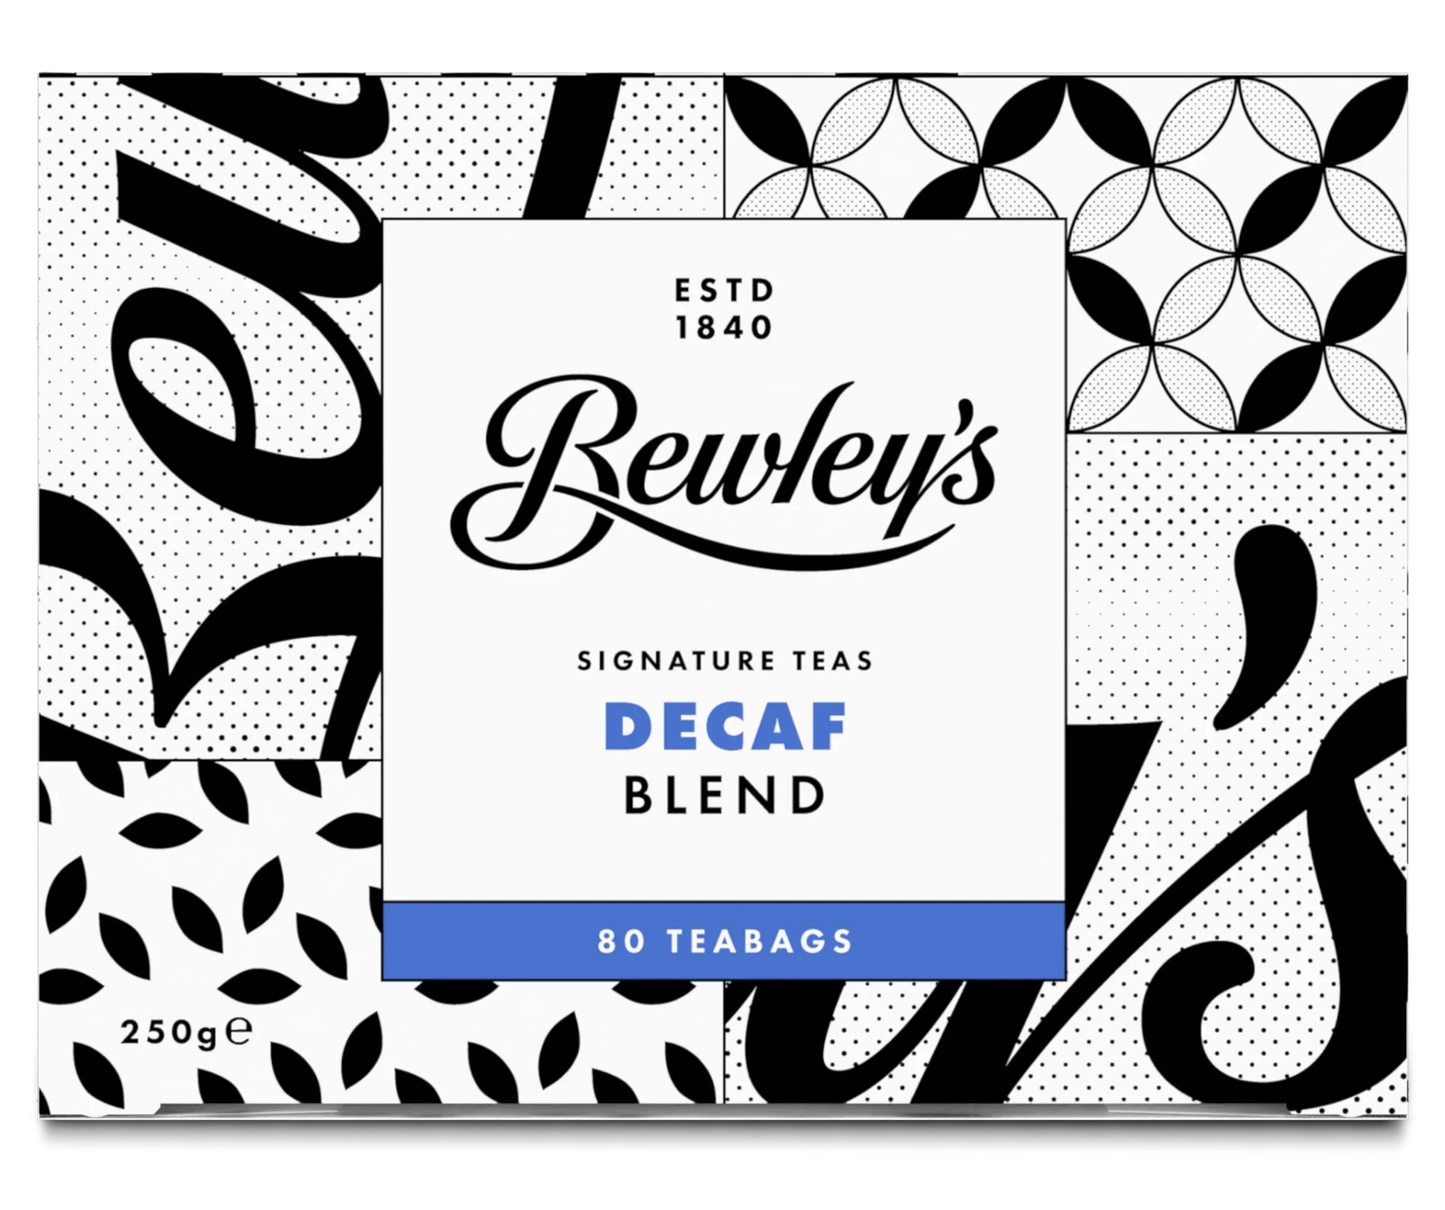 Bewley's Decaf Blend Tea 80's 250g